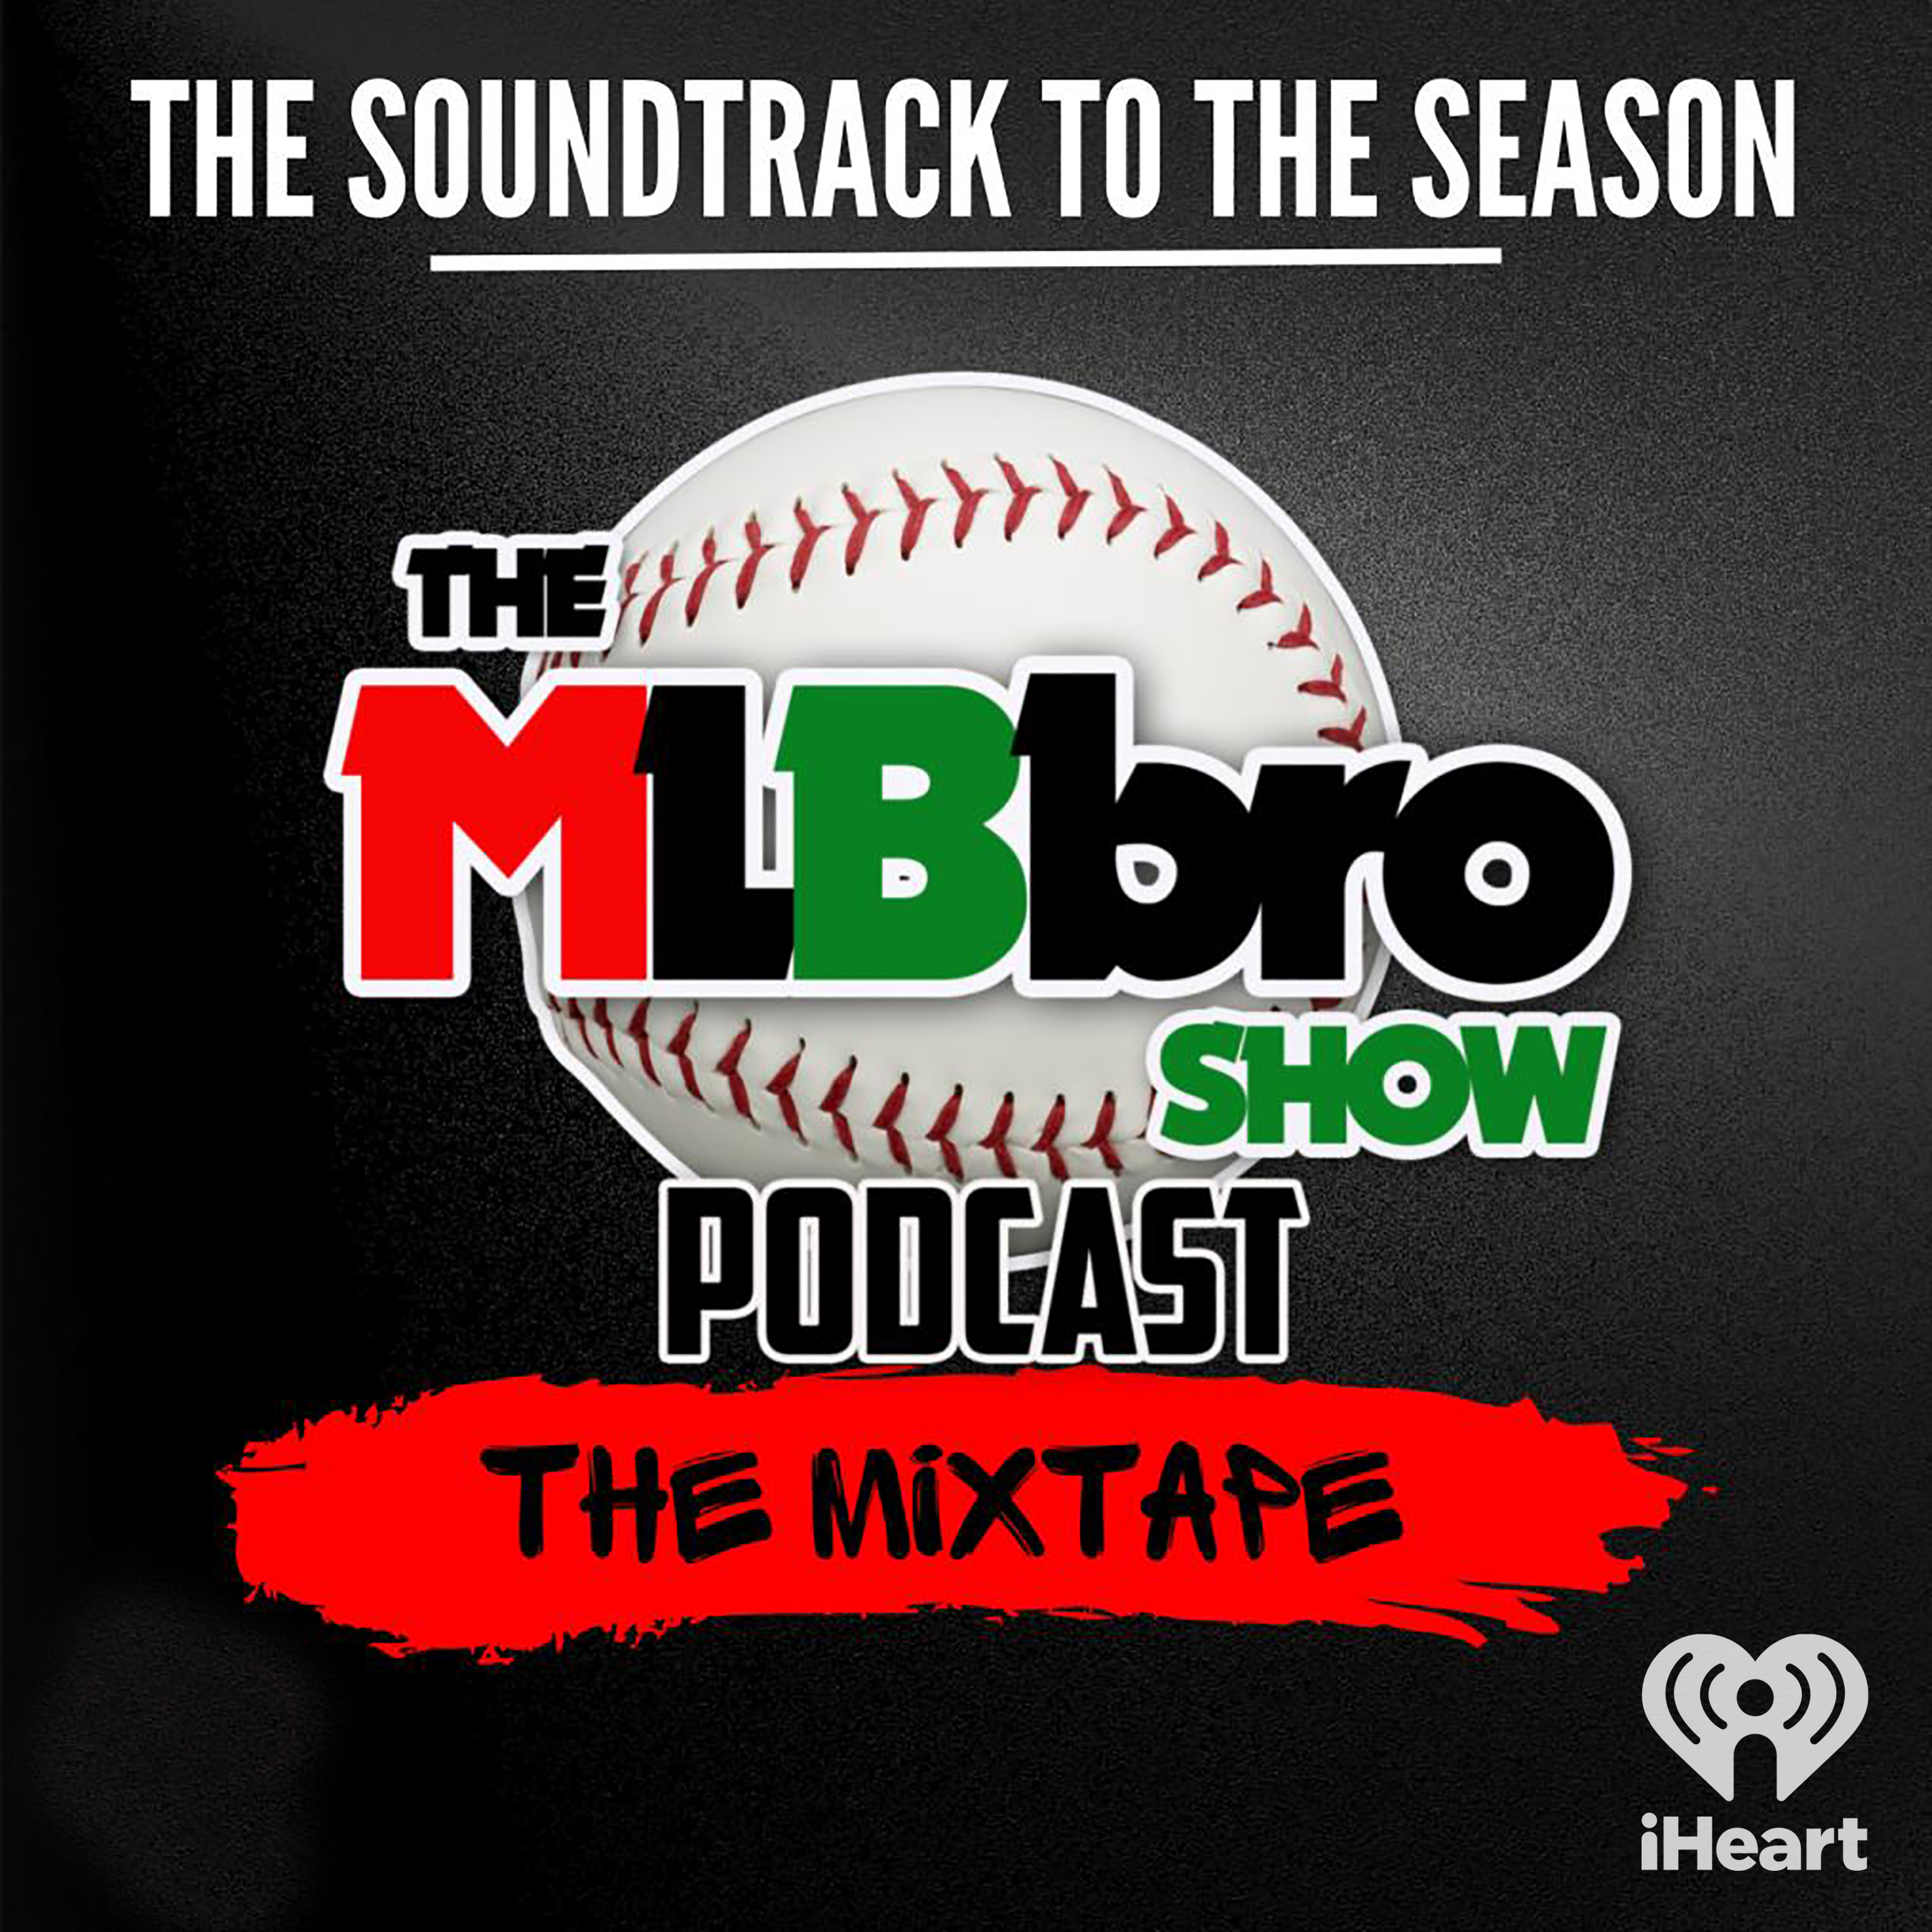 MLBbro Show Podcast The Mixtape Vol 3 Episode 12